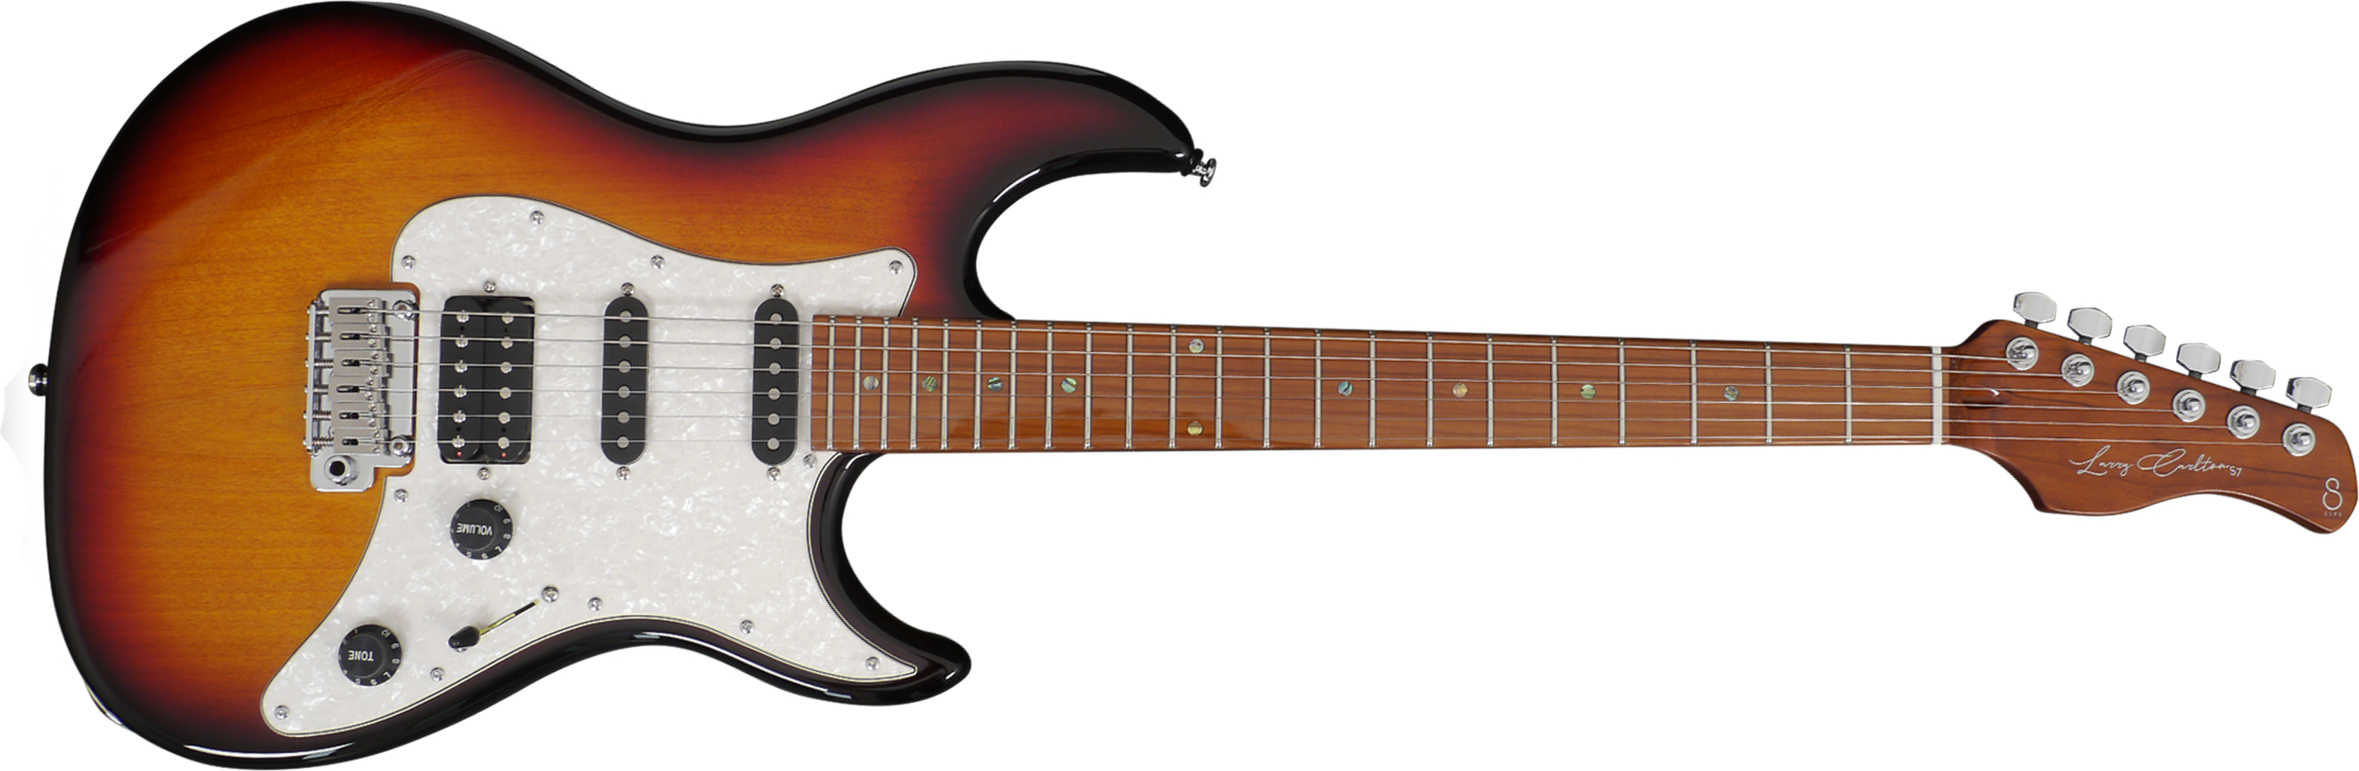 Sire Larry Carlton S7 Signature Hss Trem Eb - 3 Tone Sunburst - Str shape electric guitar - Main picture